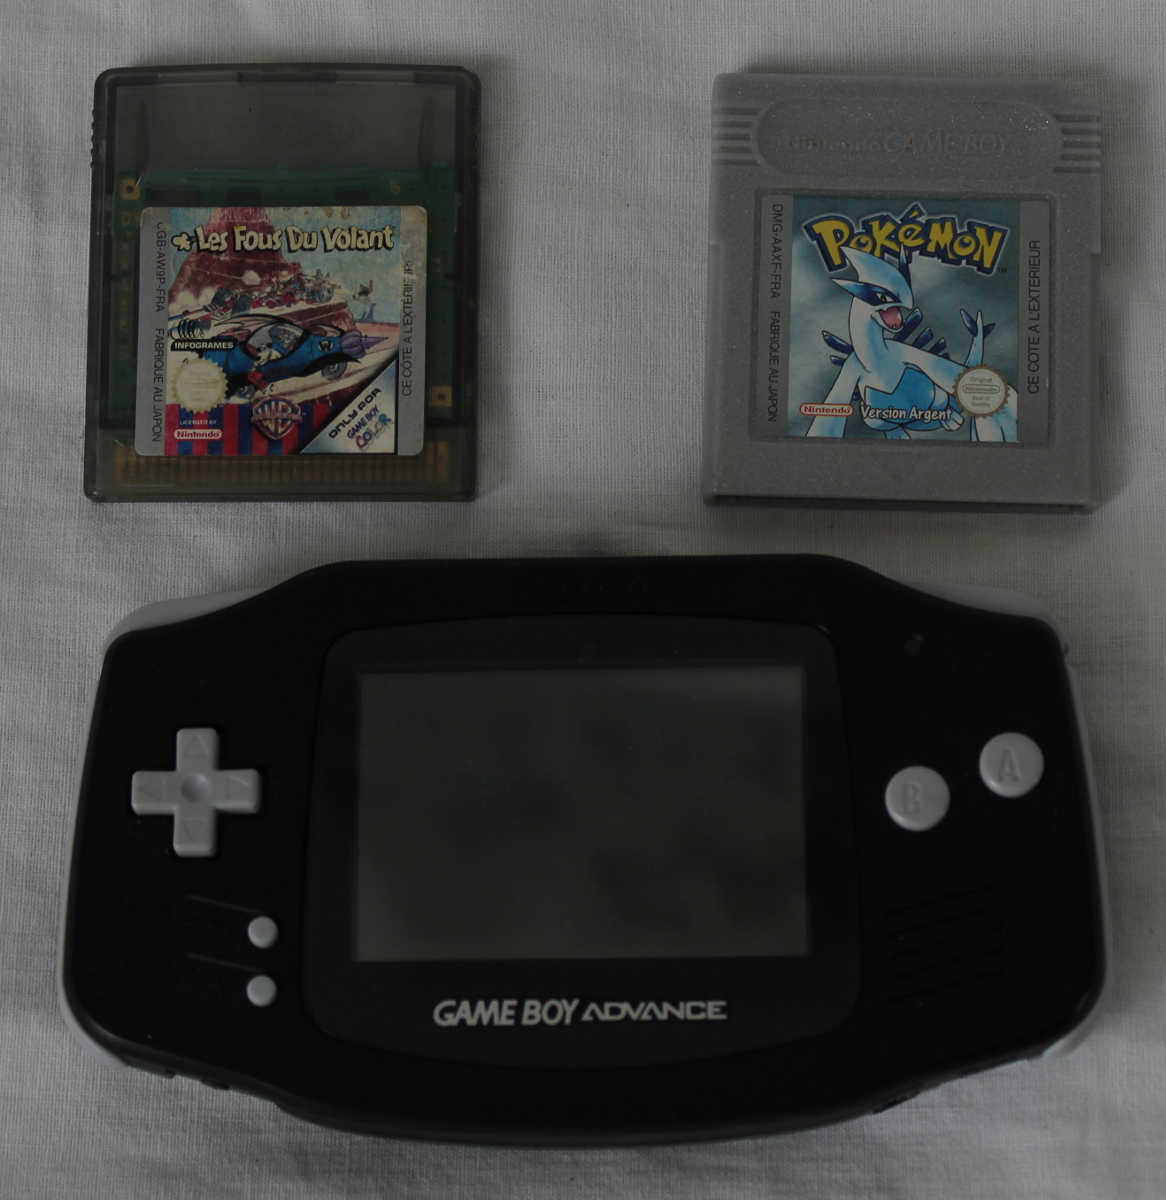 Nintendo Gameboy Advance, Les Fous Du Volant (GBC), Pokémon Silver (GBC)